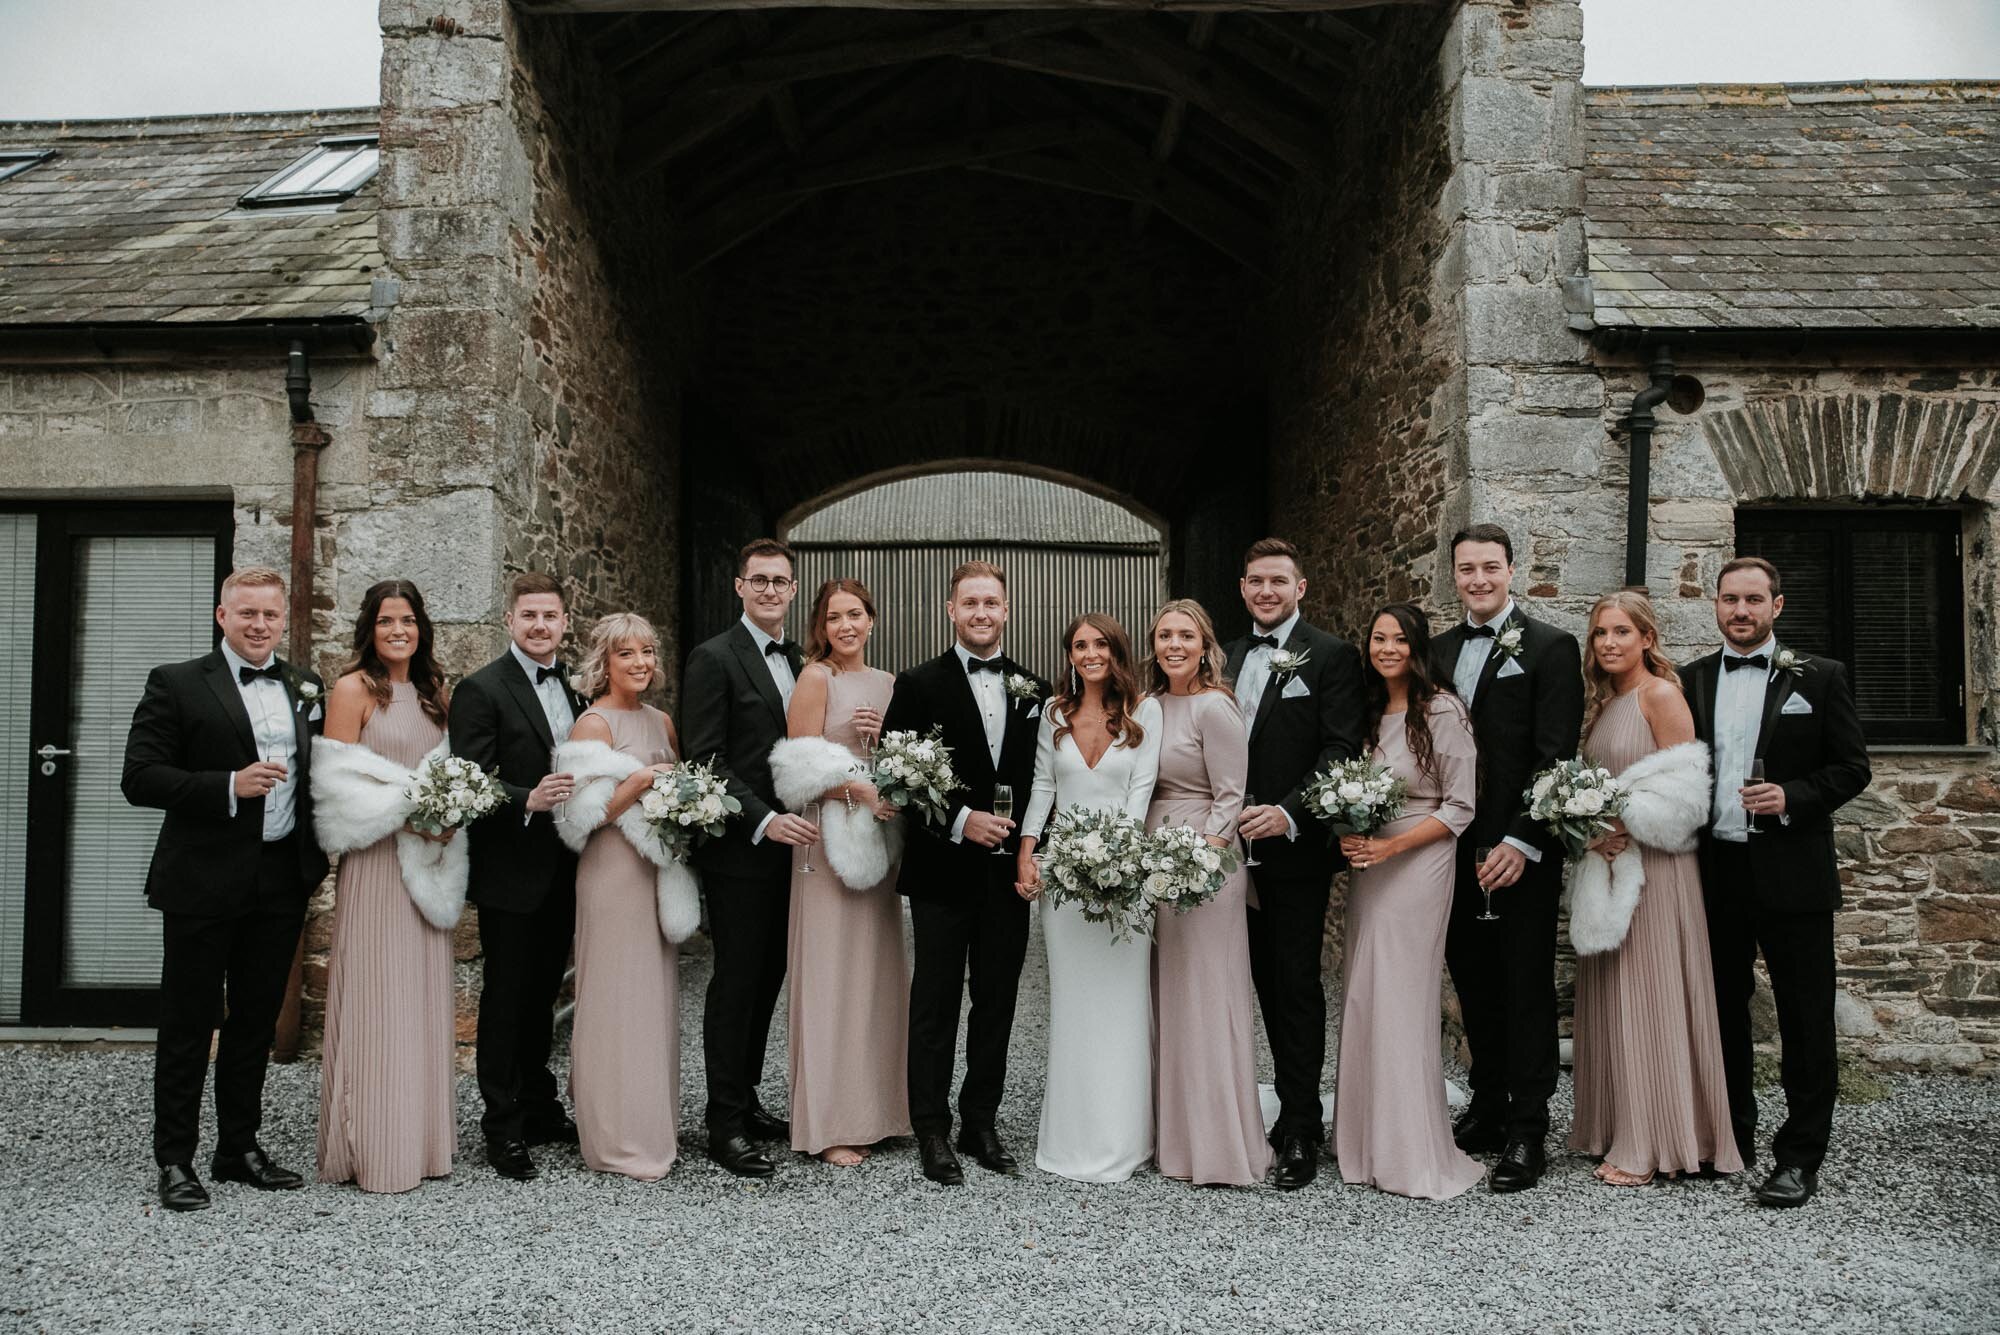 Anran Barn Wedding // Devon Wedding Photographer Katy Jones // Natural style wedding photography // Group photos